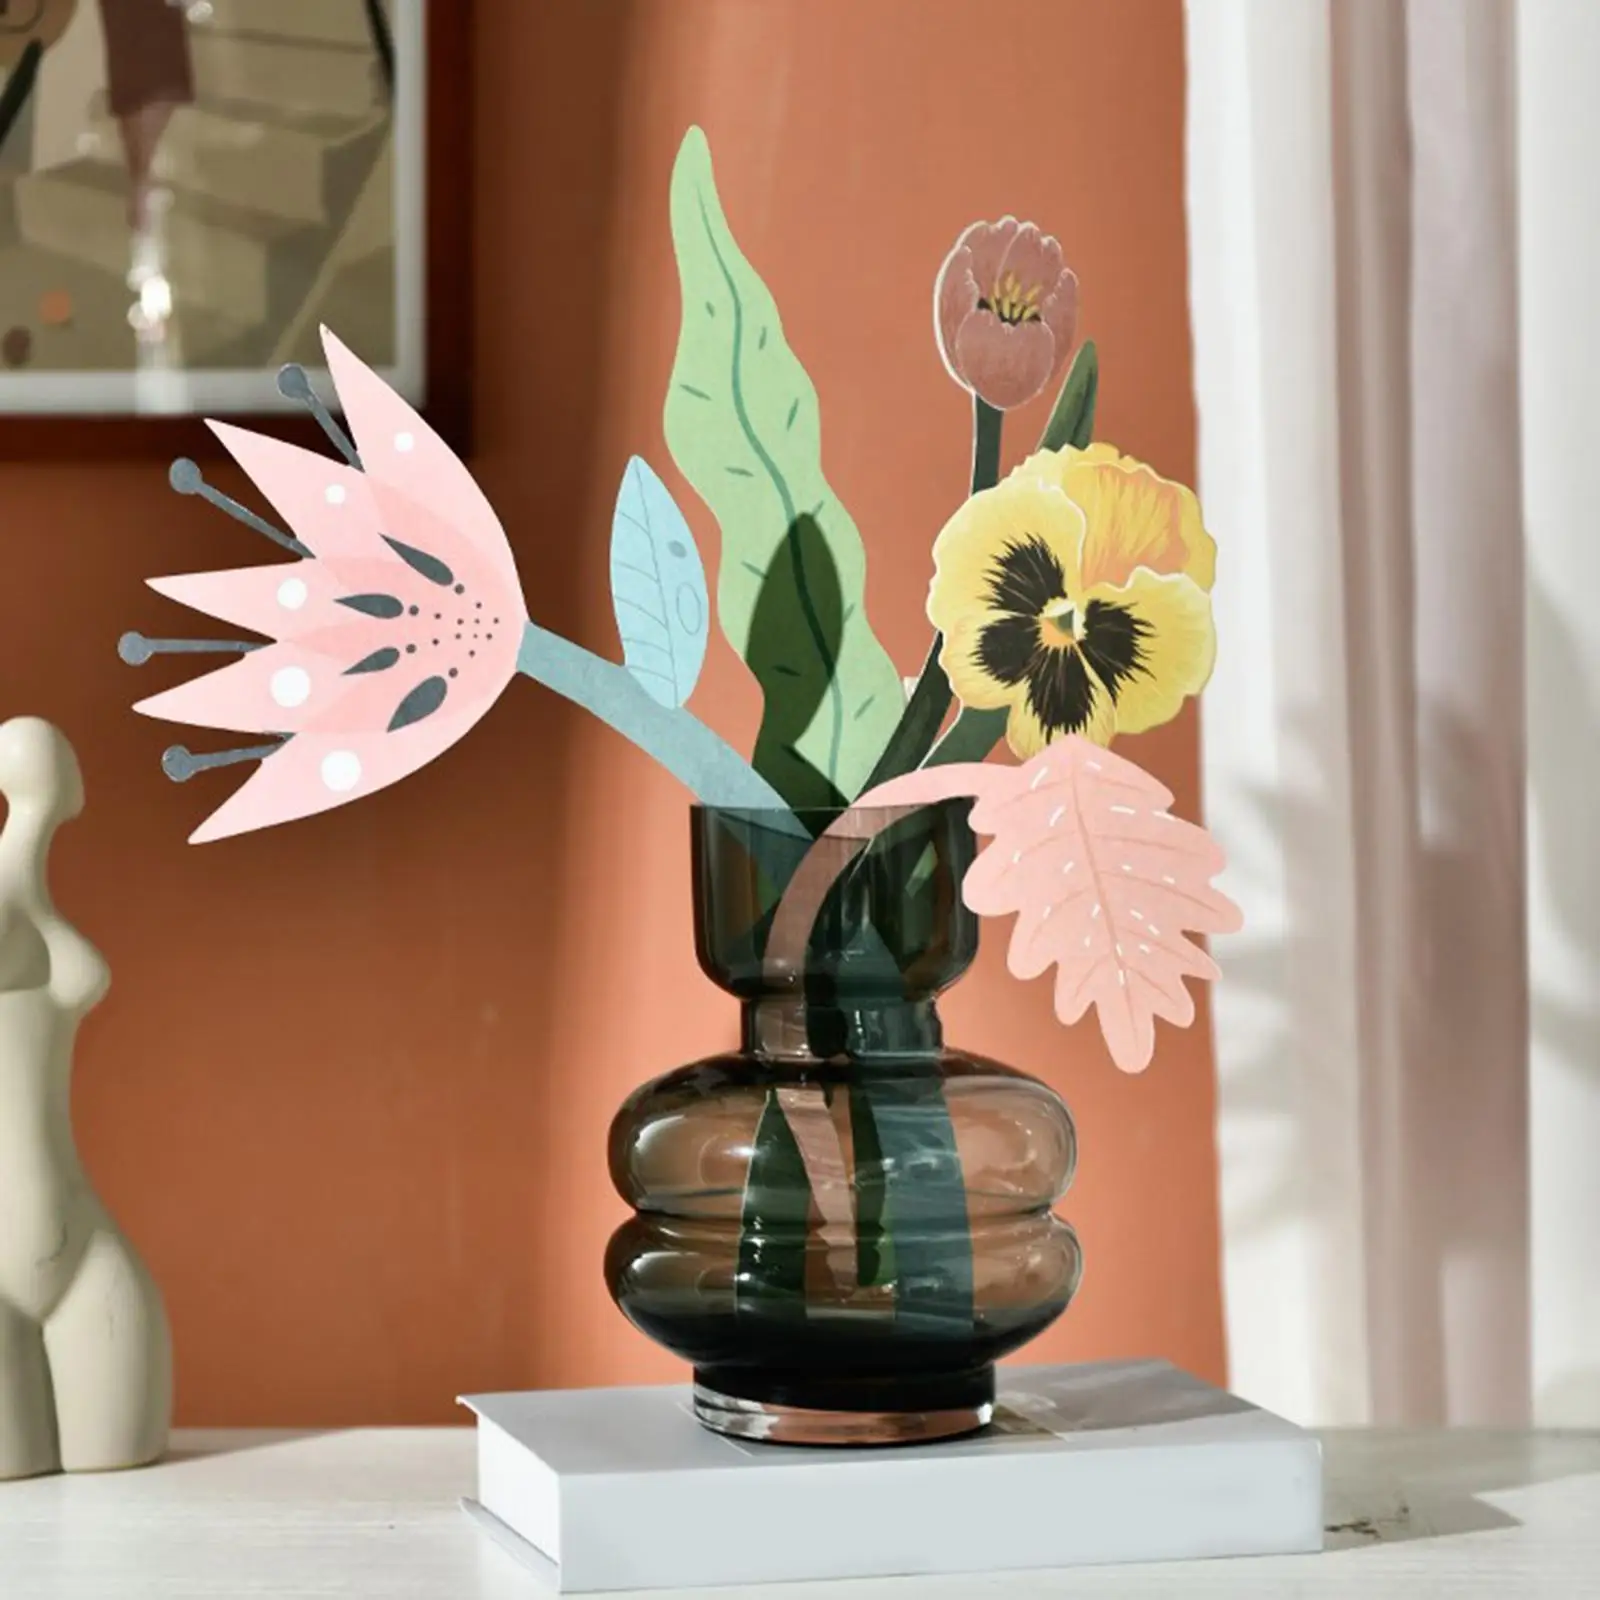 Paper Flower Art Bouquet Fragrance Card Decorative Nordic Style for Wedding DIY Craft Flower Arrangement Scrapbooking Store